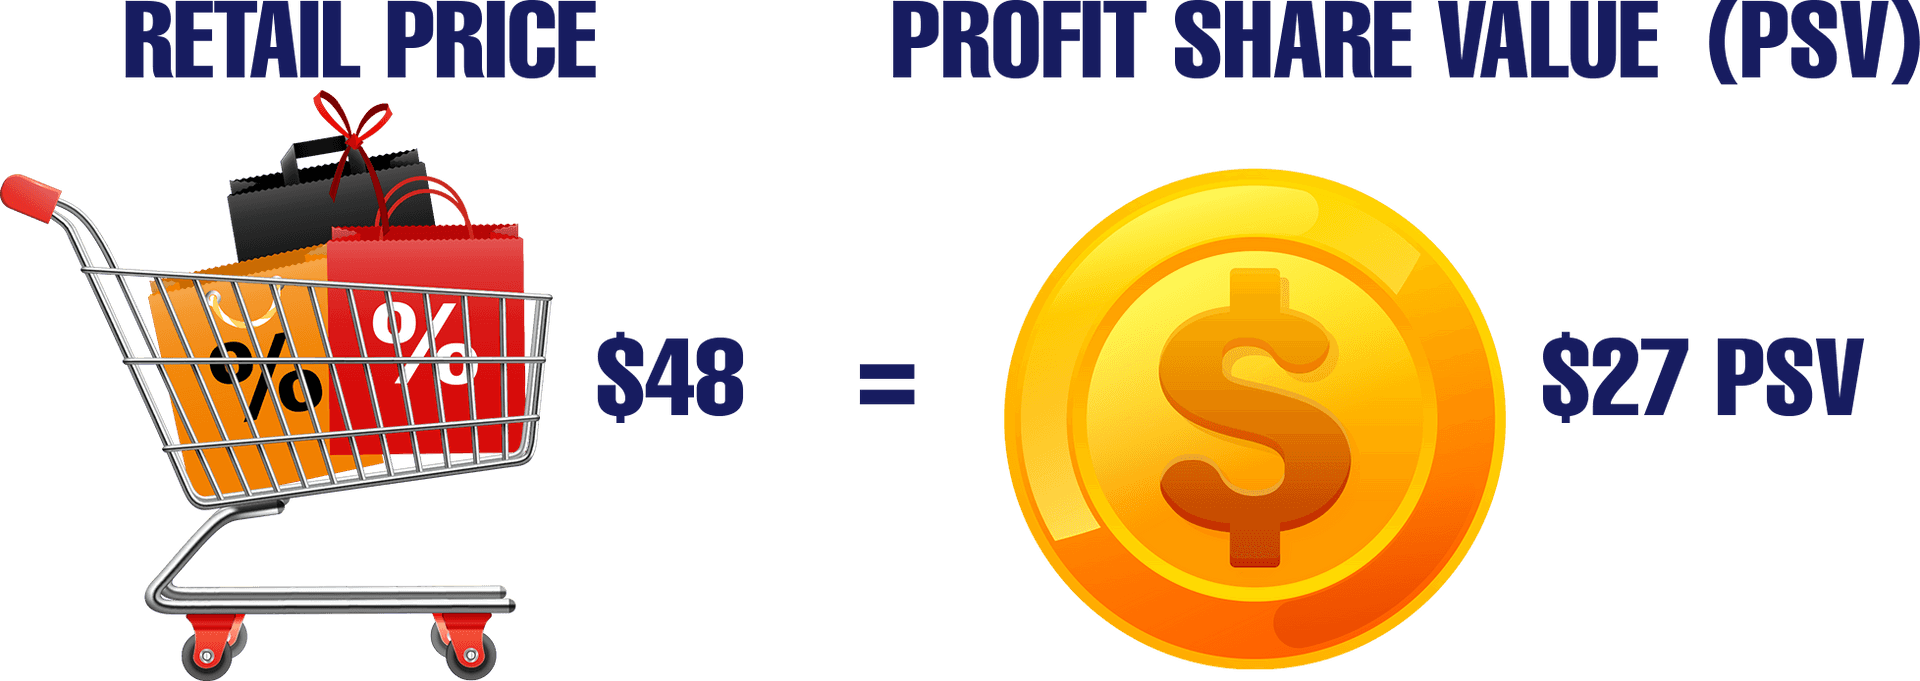 Retail Pricevs Profit Share Value PNG